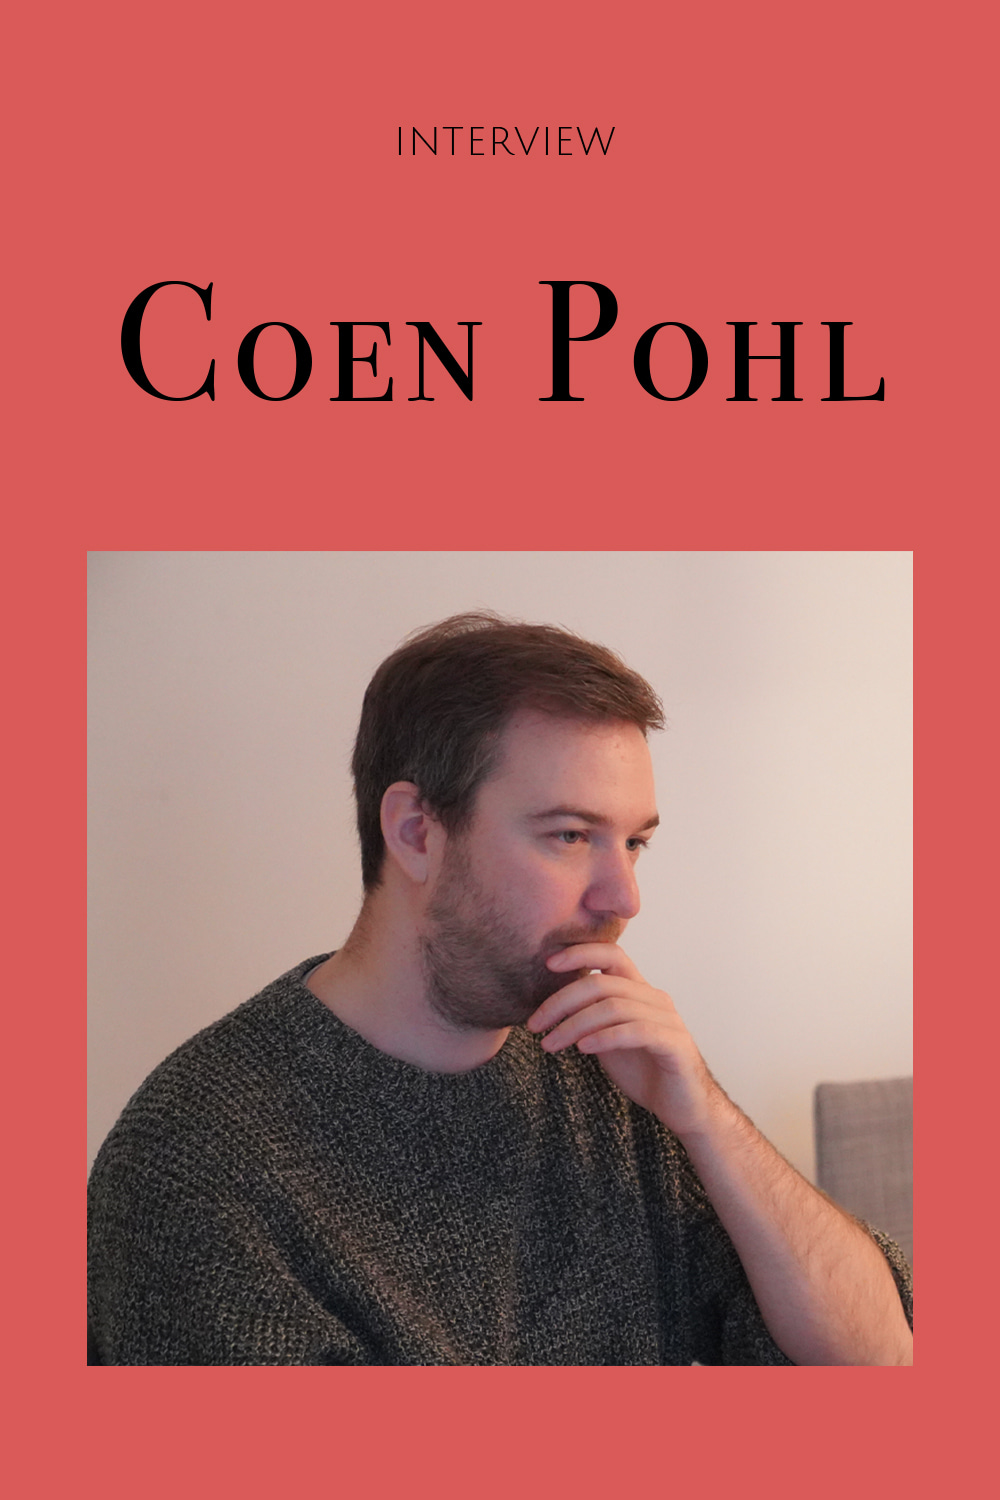 [INTERVIEW] Coen Pohl